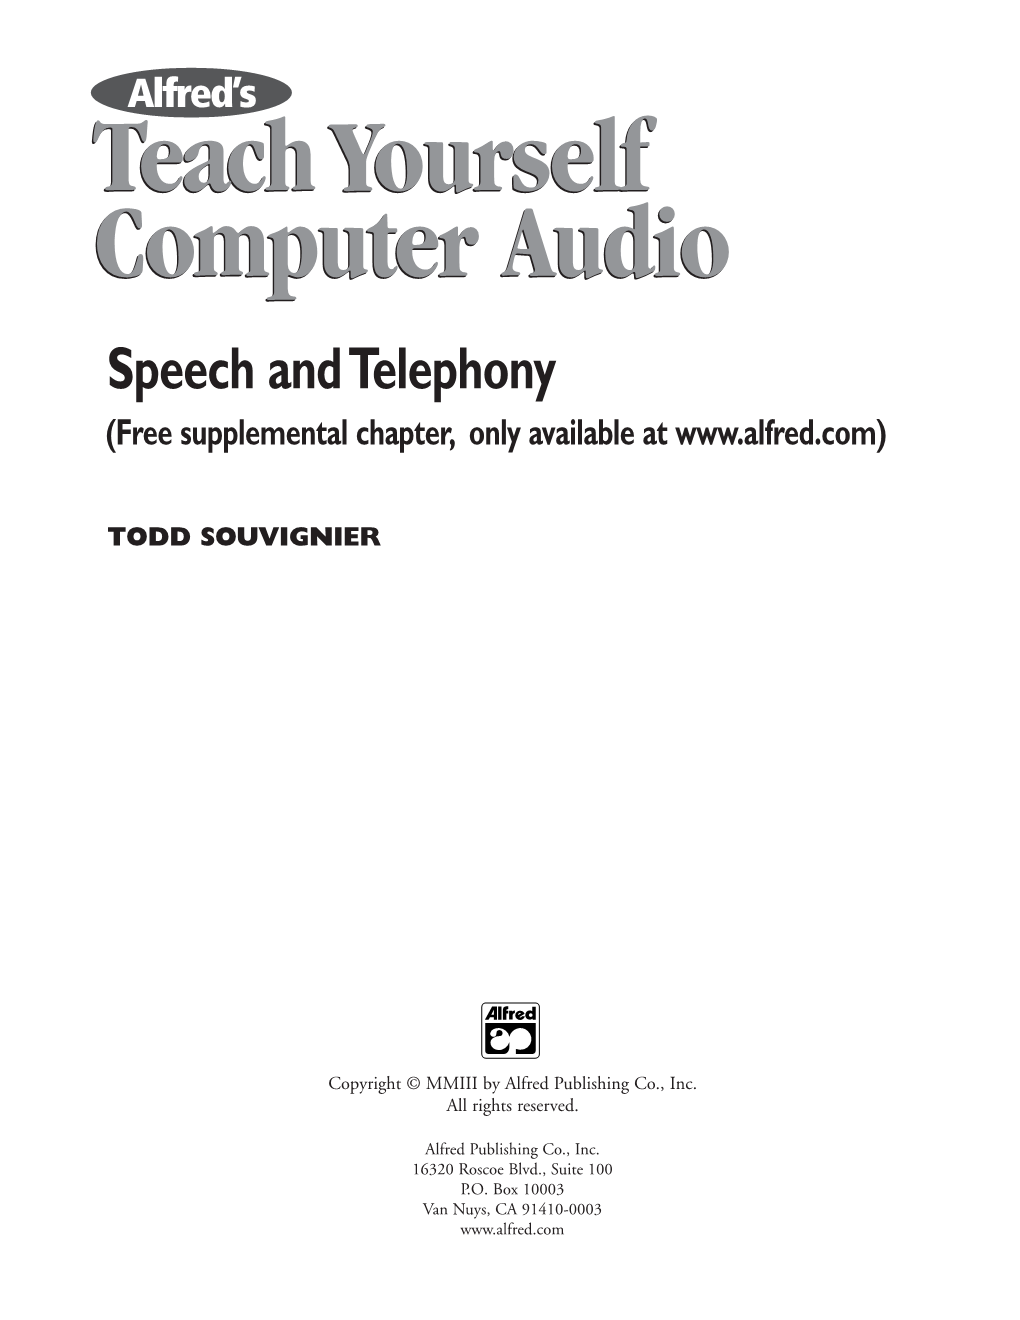 Speech & Telephony for Web.Qxp